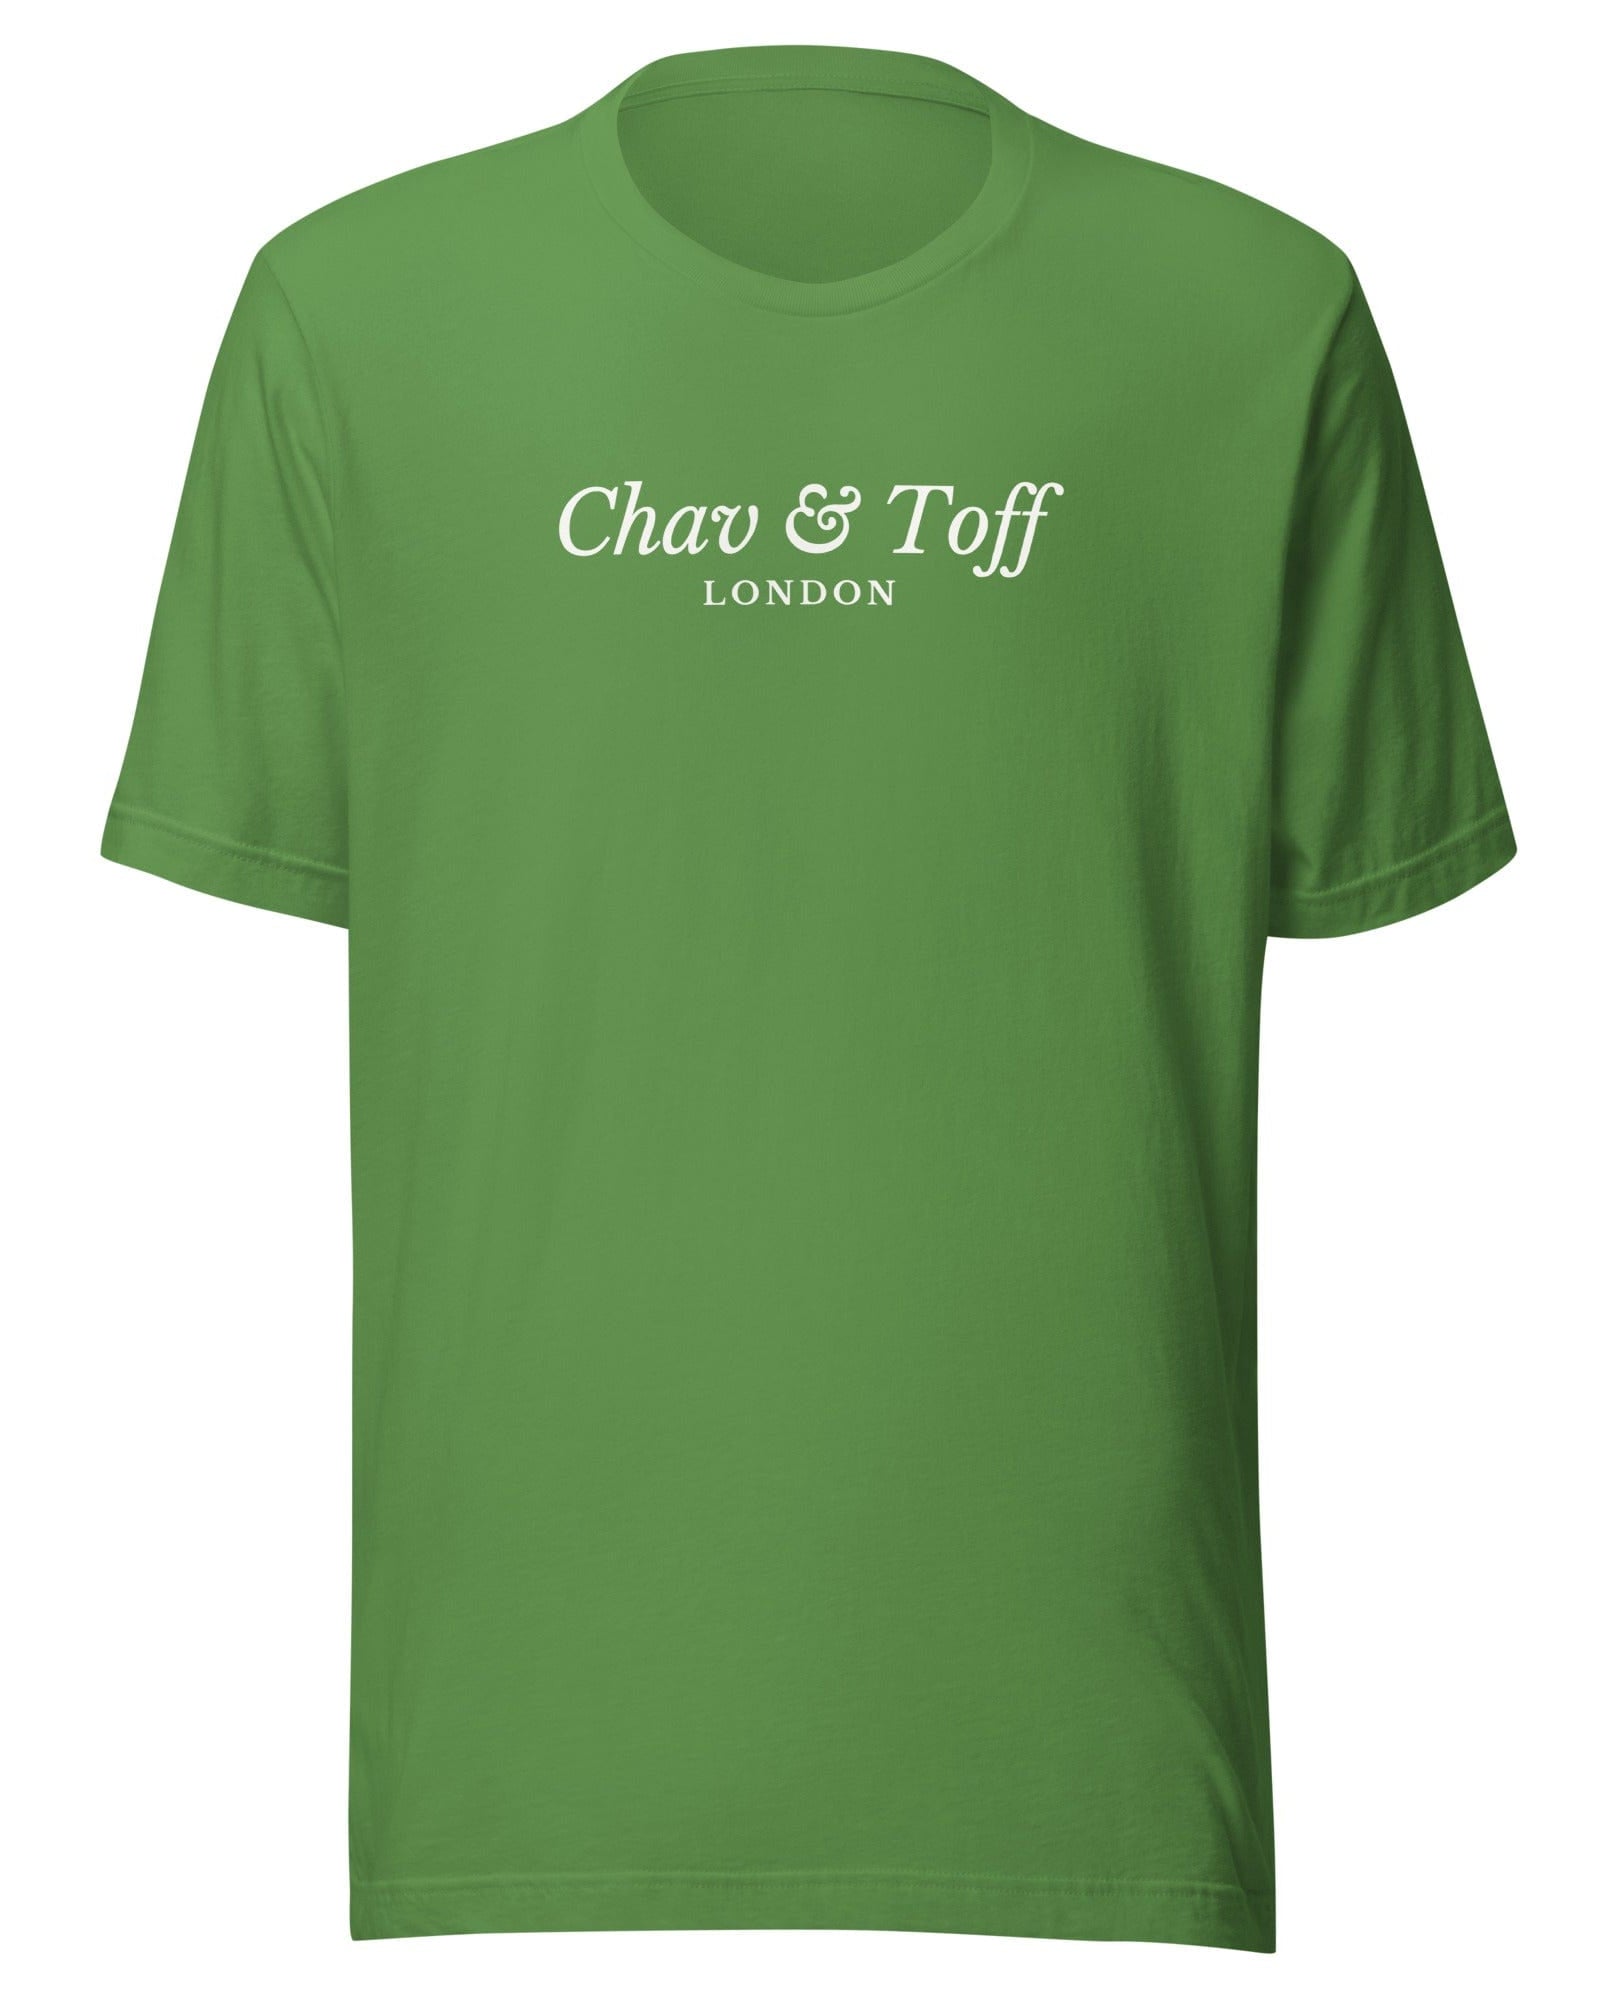 Chav & Toff London T-Shirt Leaf / S Shirts & Tops Jolly & Goode